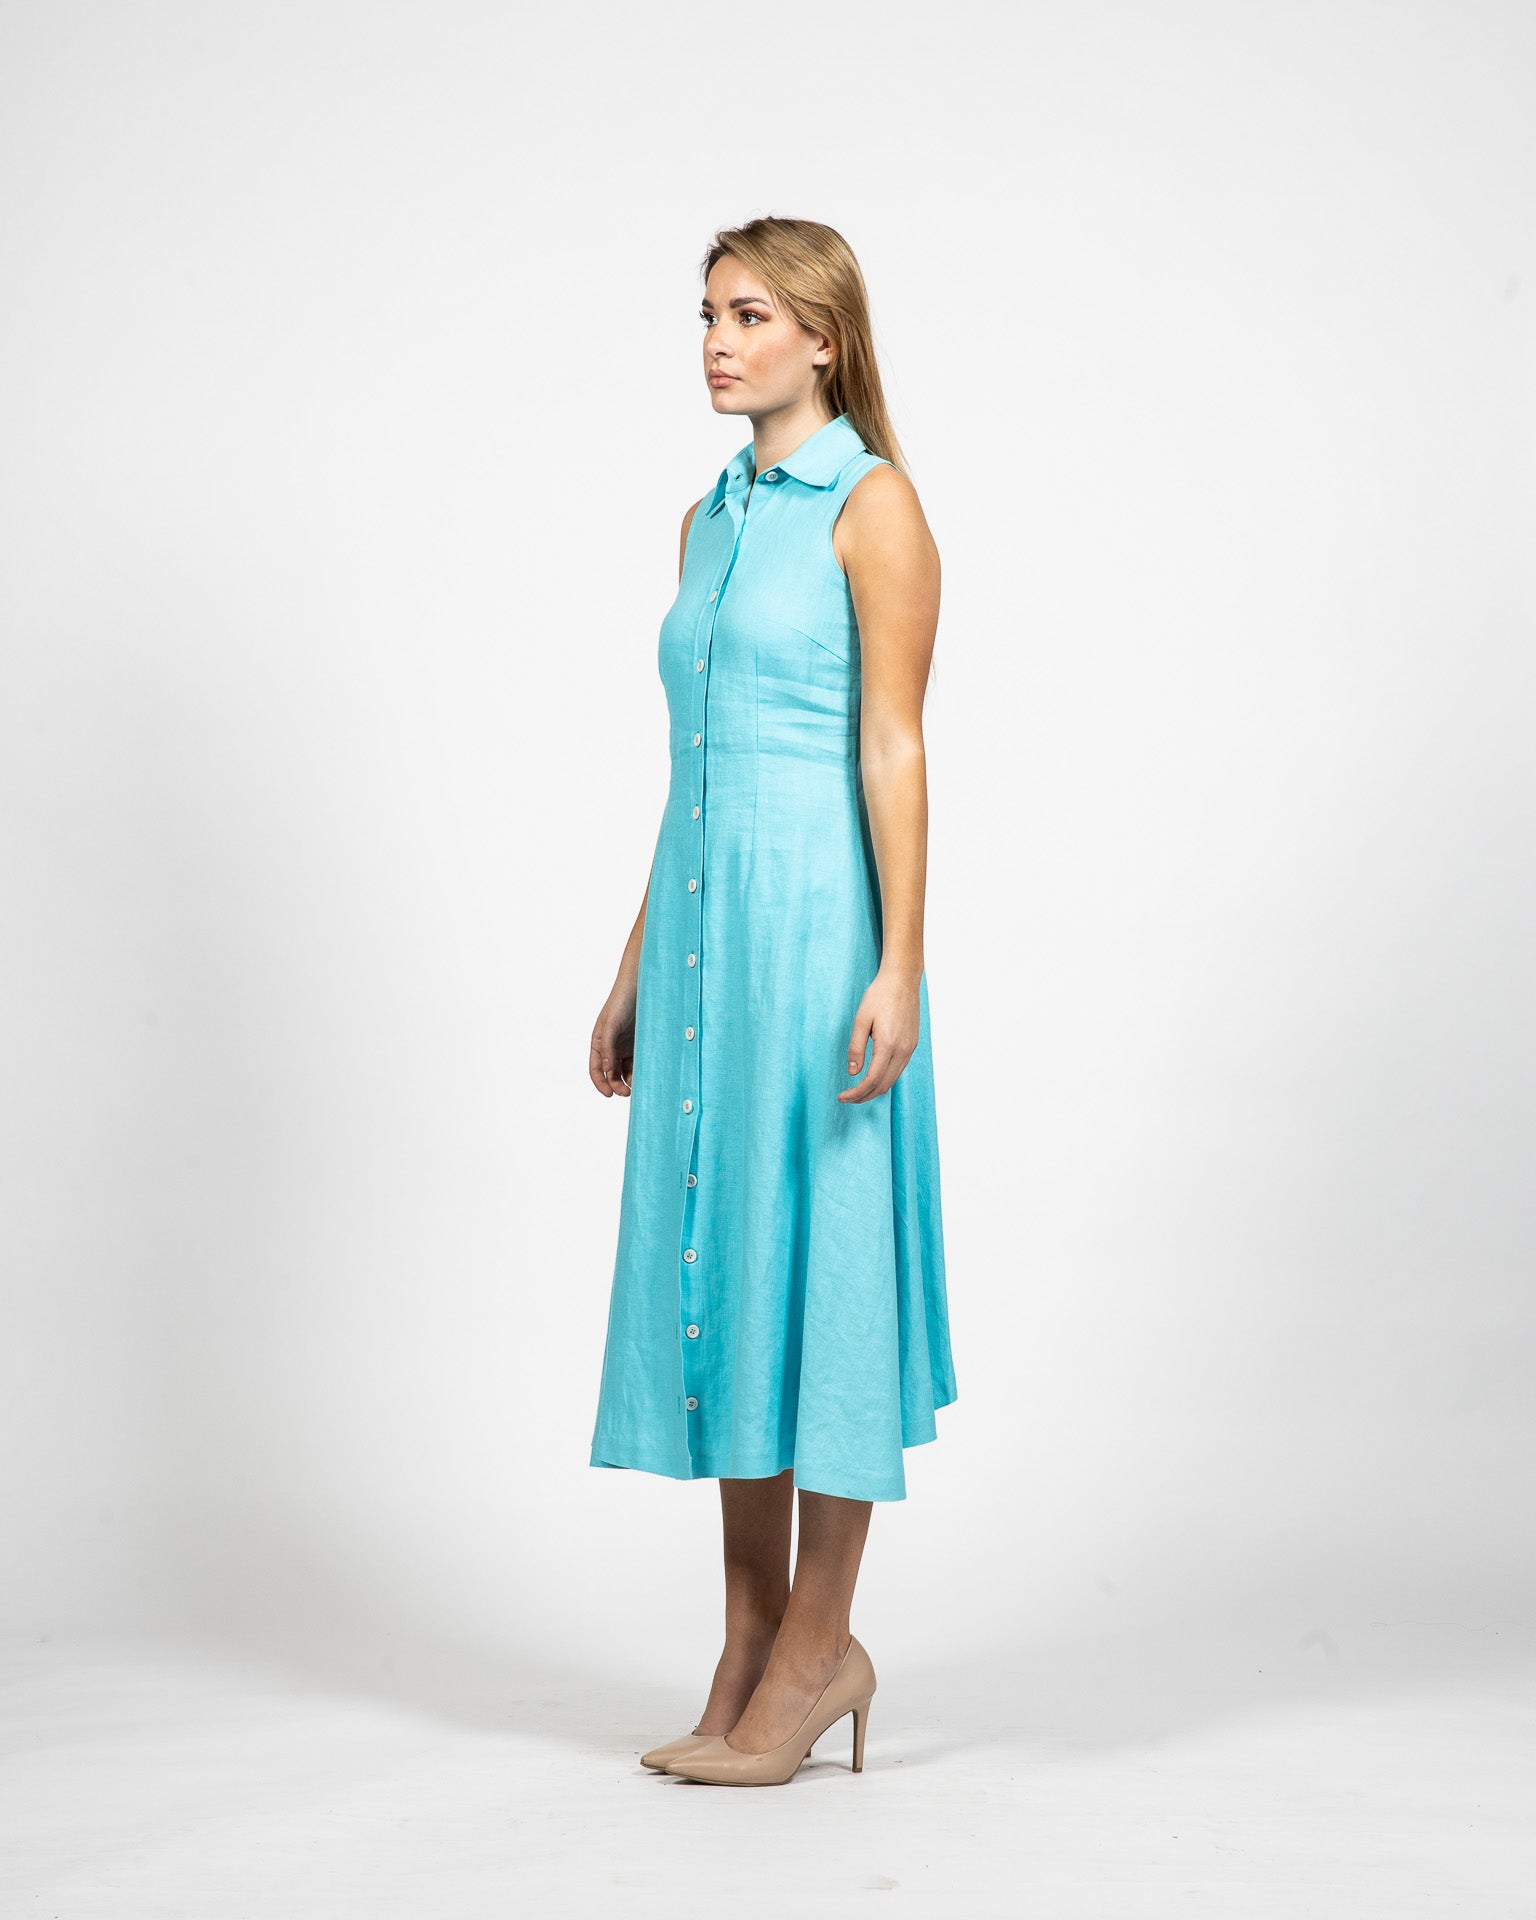 Long Buttoned Collar Dress Turquoise - Side View - Samuel Vartan